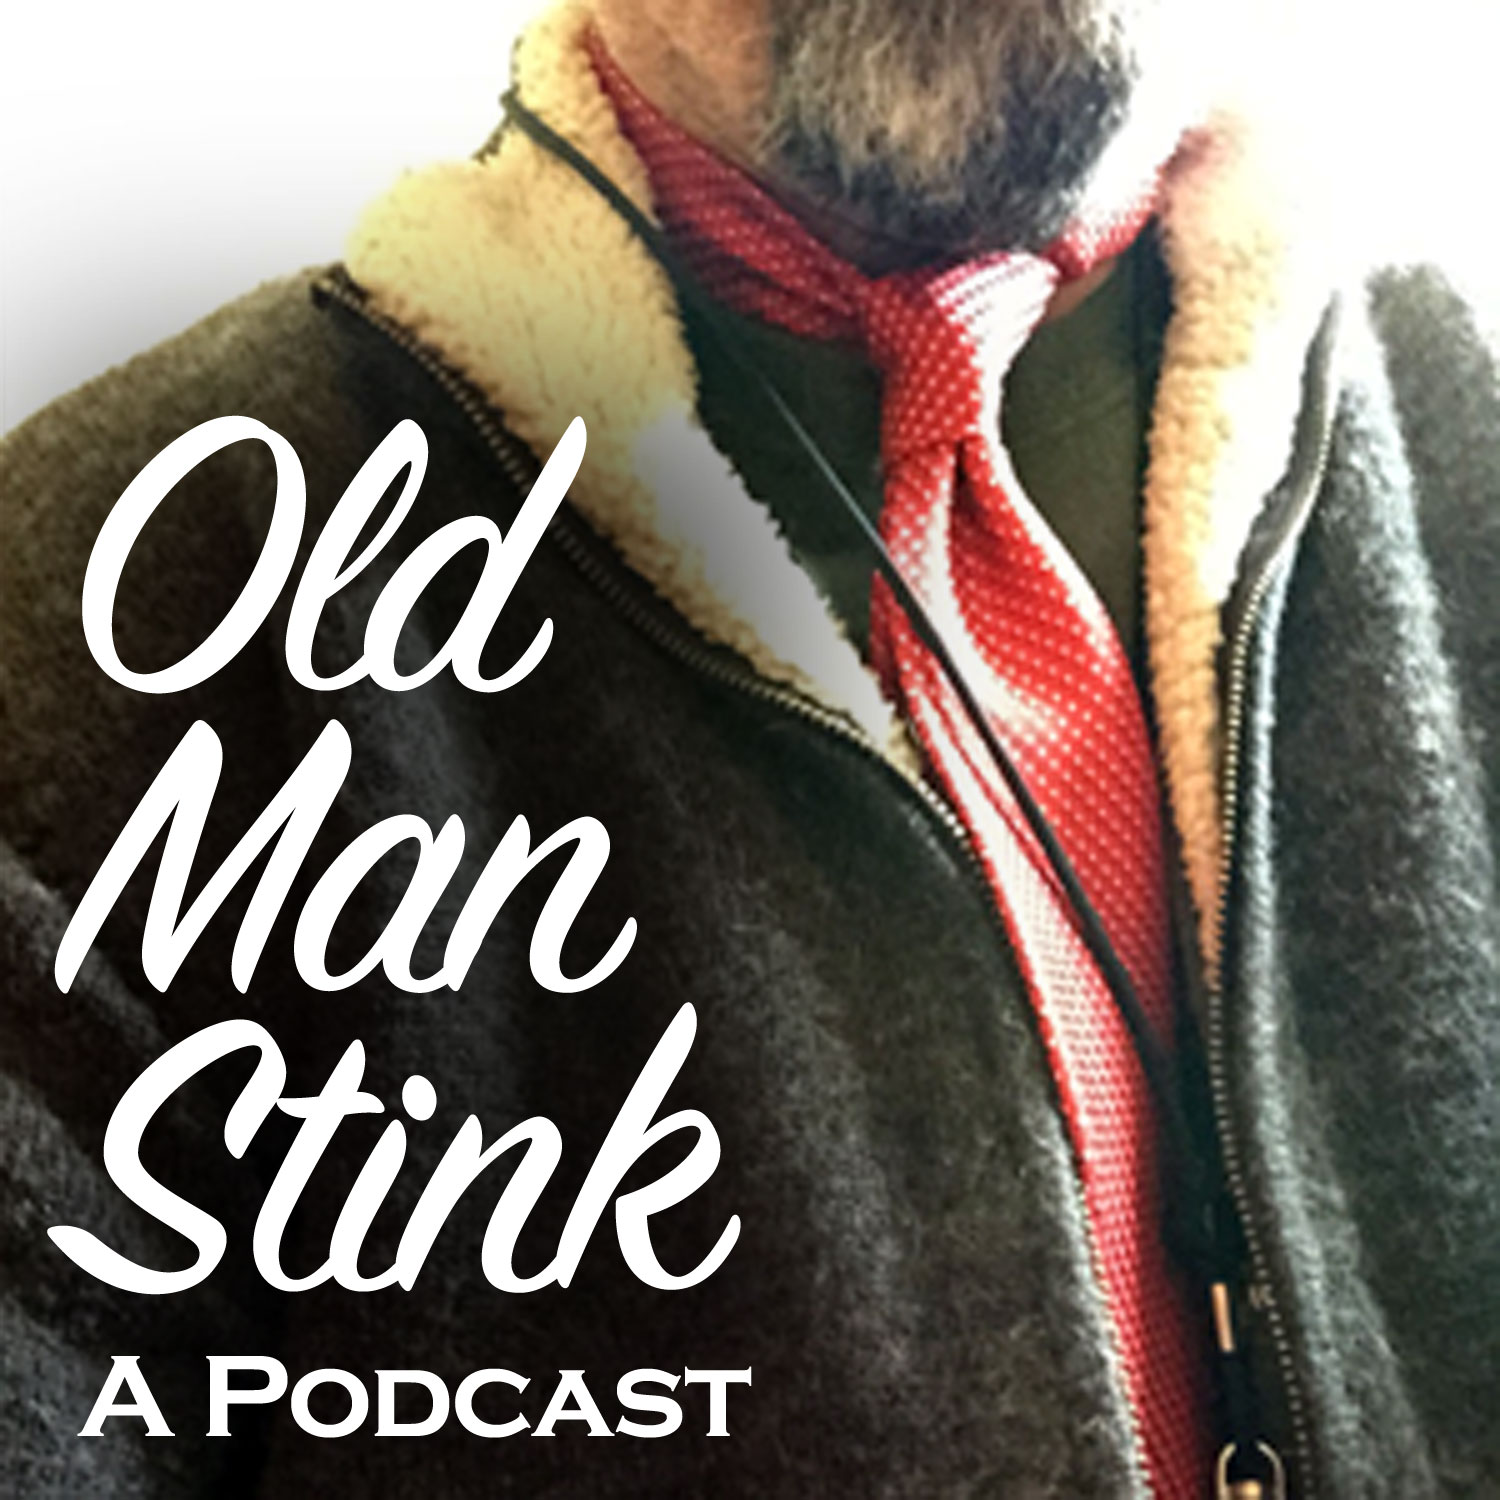 Old Man Stink